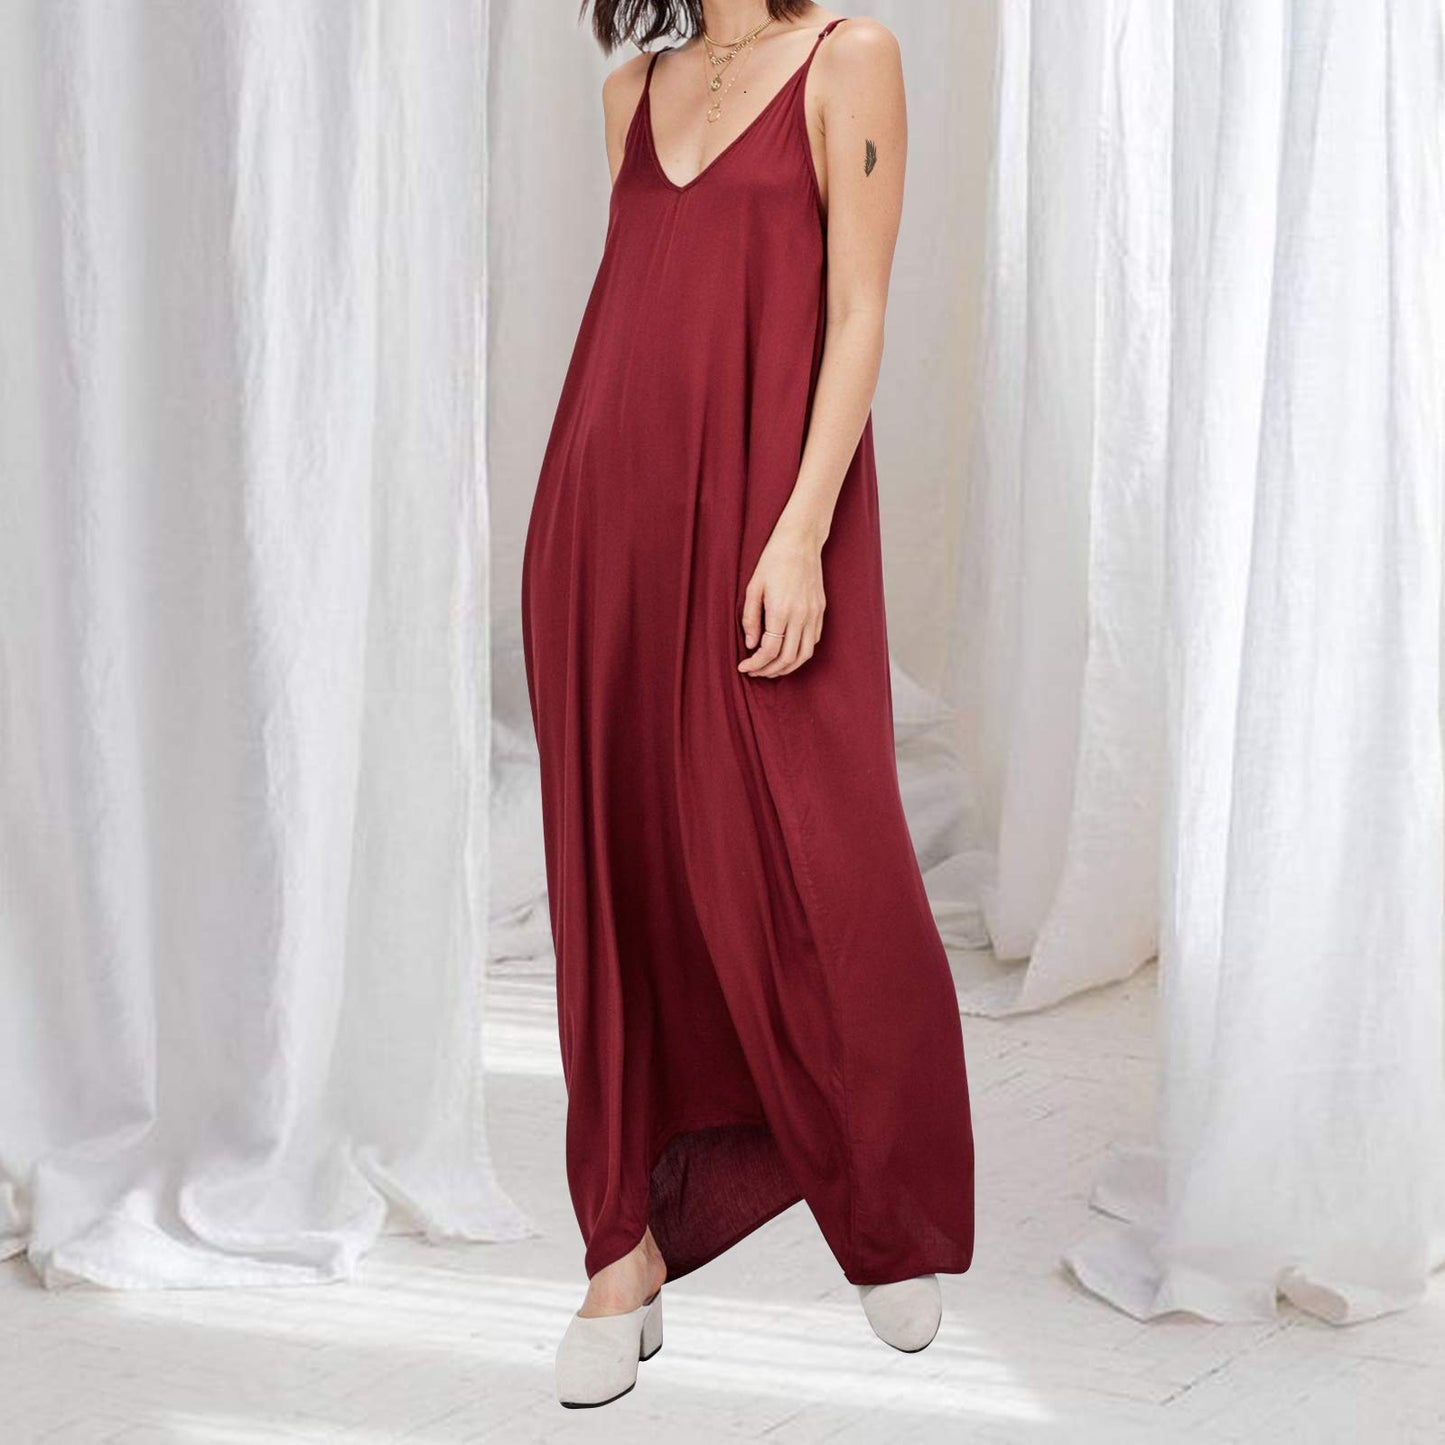 EXLURA Women's Tie Shoulder Scoop Neck Sleeveless Cami Split Maxi Dress T-Shirt Strappy Backless House Jersey Dress